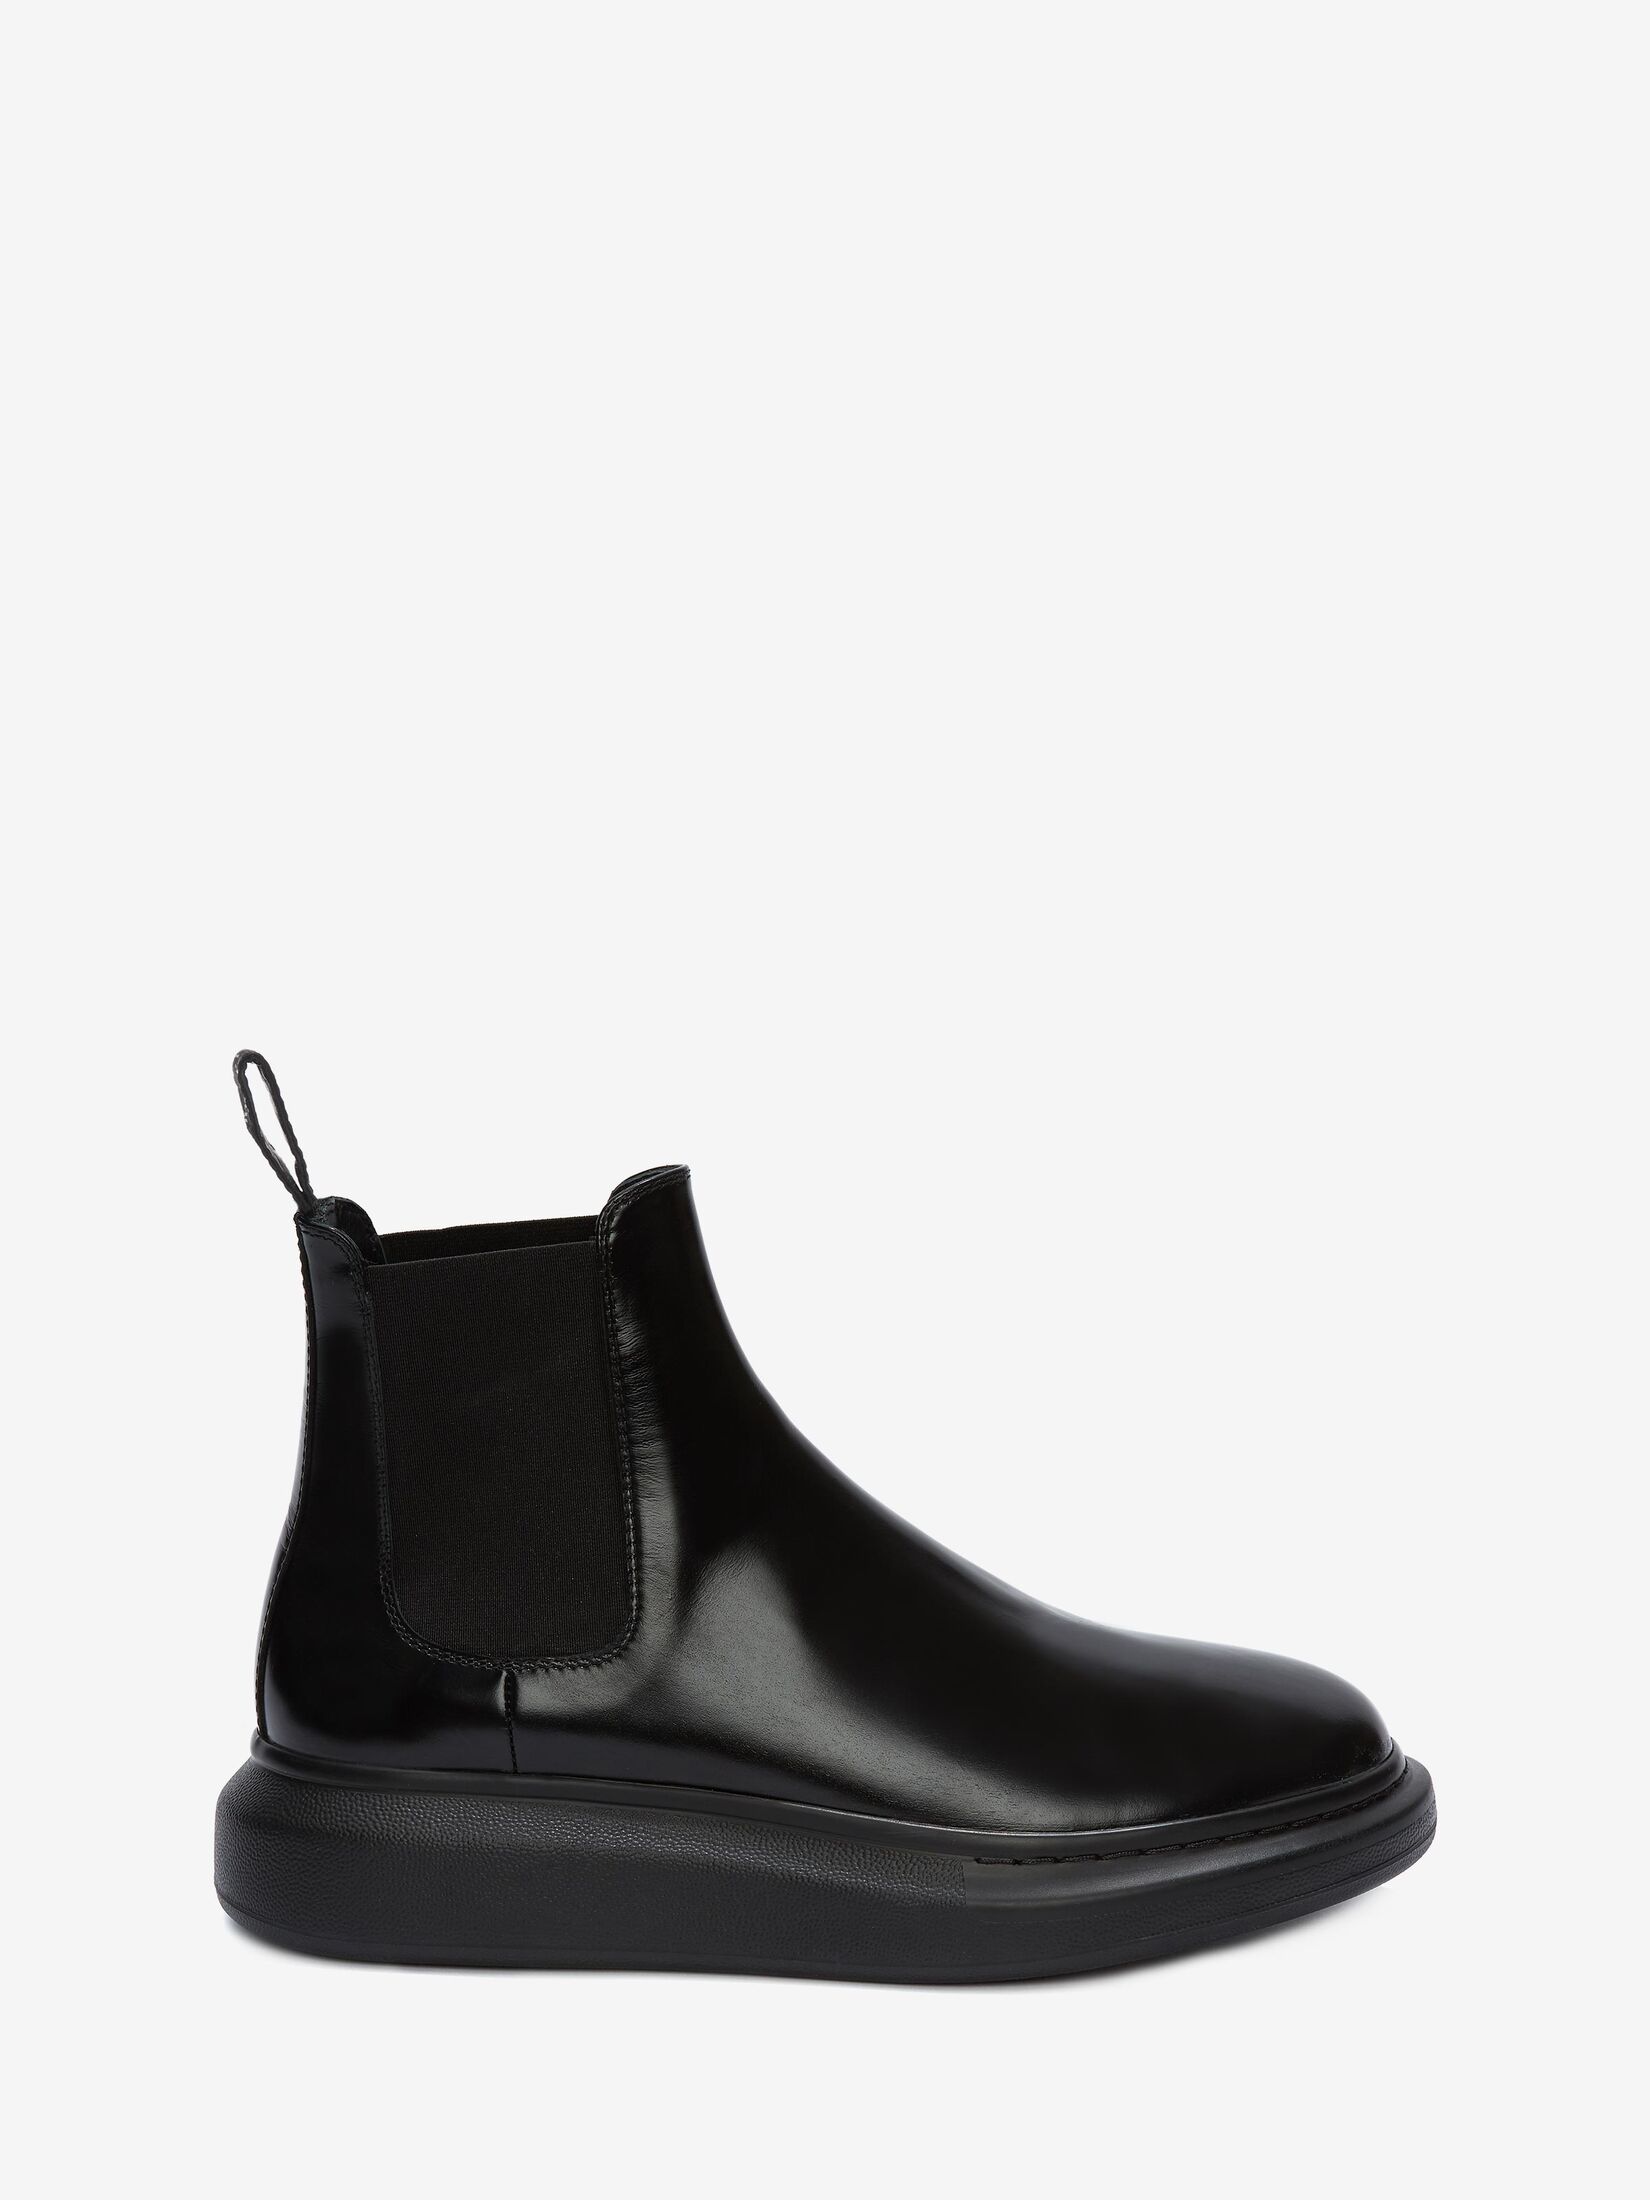 Tread Slick Boot in Black/White | Alexander McQueen US